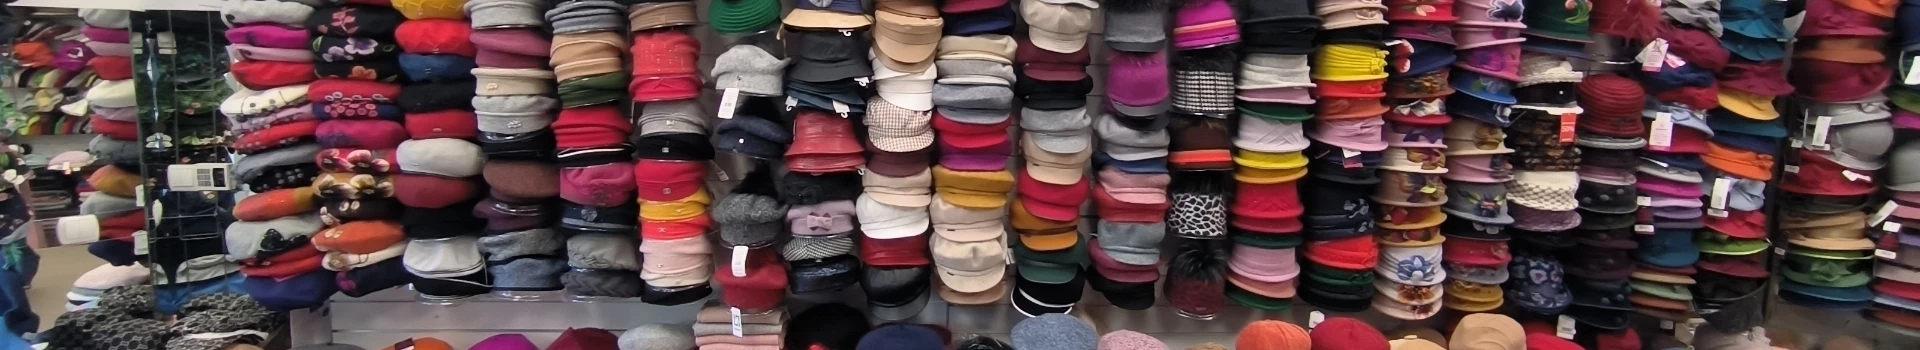 czapki i kapelusze